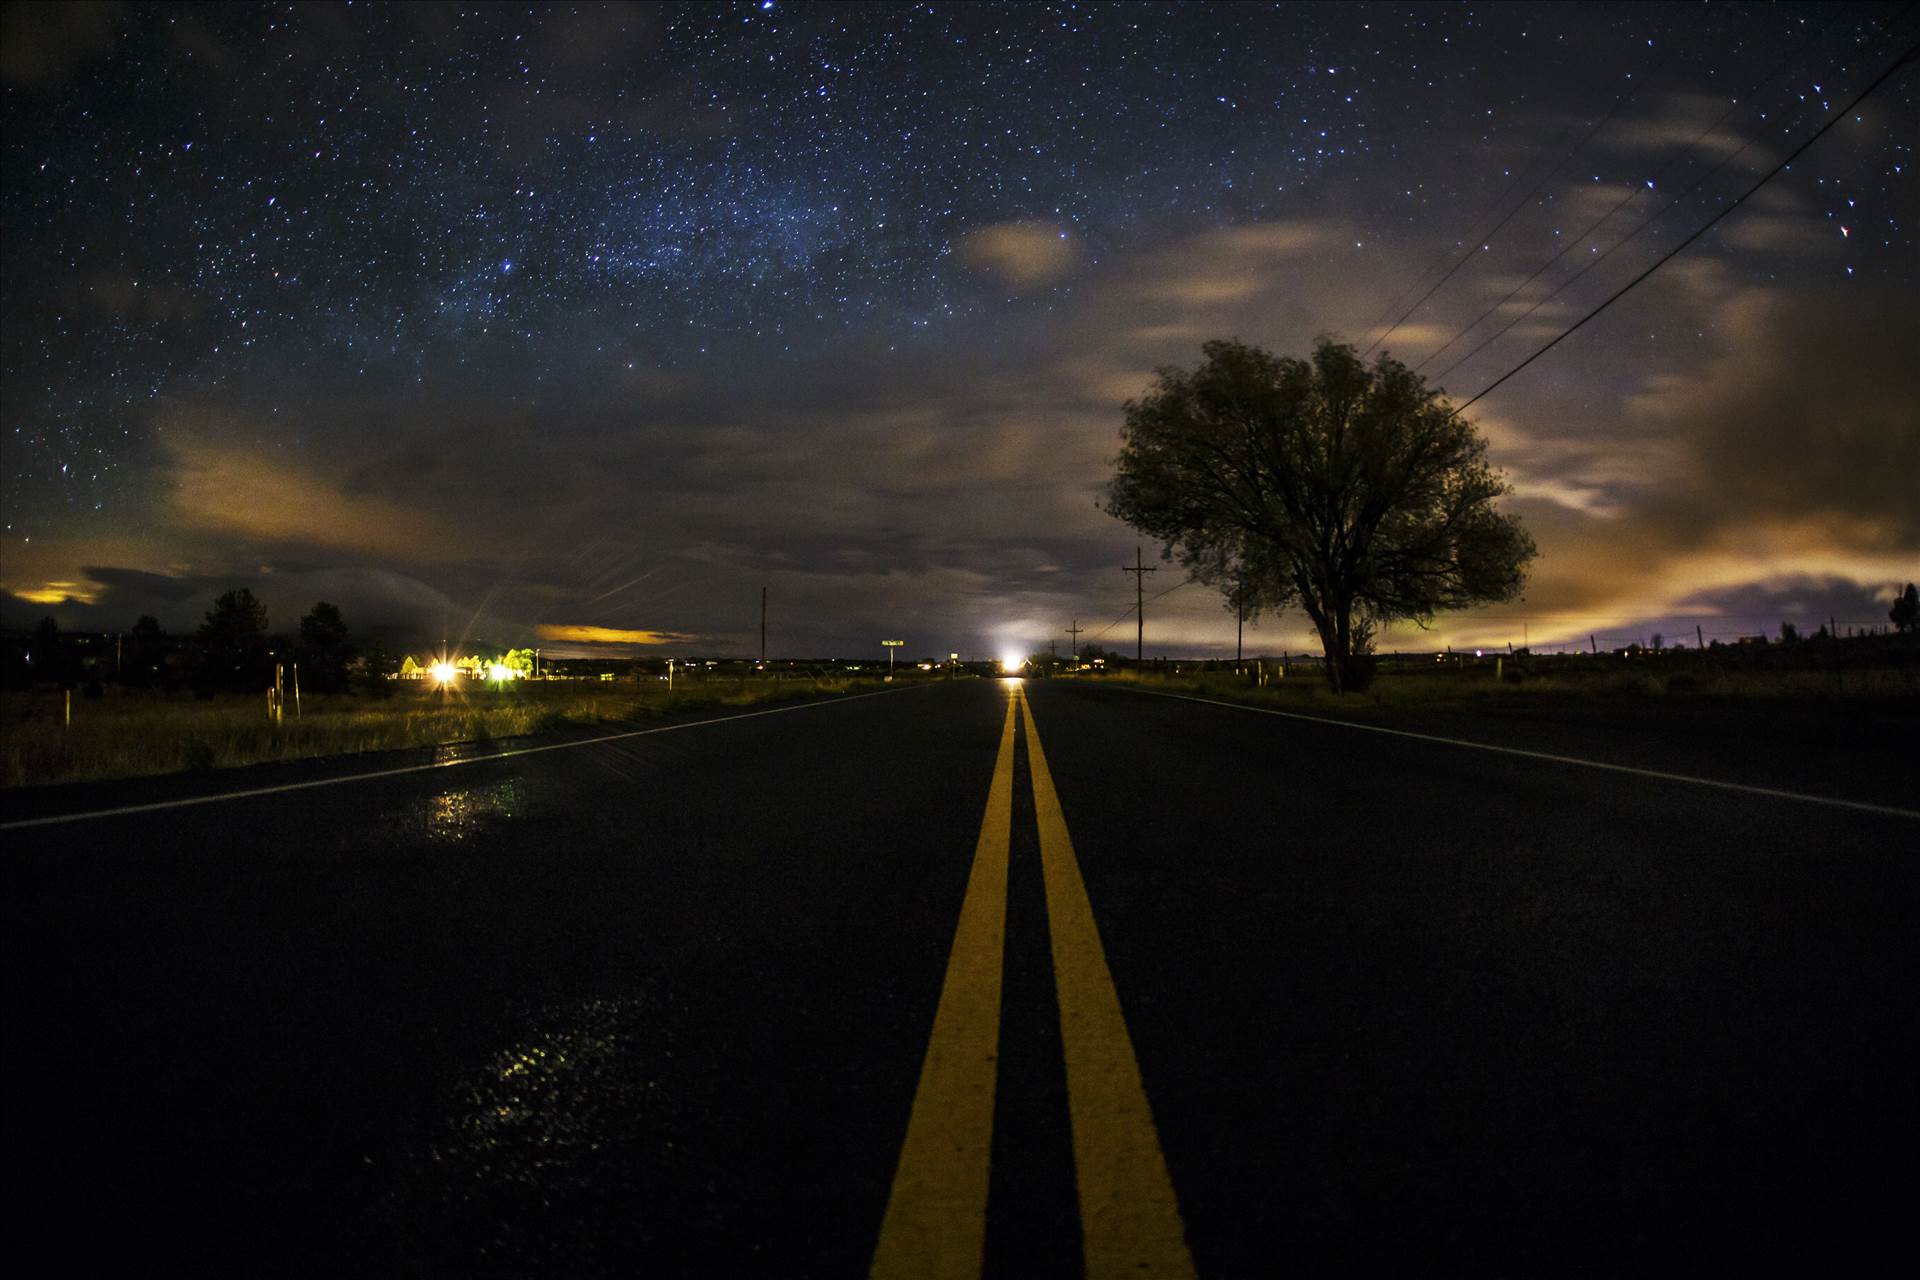 Milky Way Peeking From Behind The Clouds.jpg - undefined by Joey Onyxone Sandoval